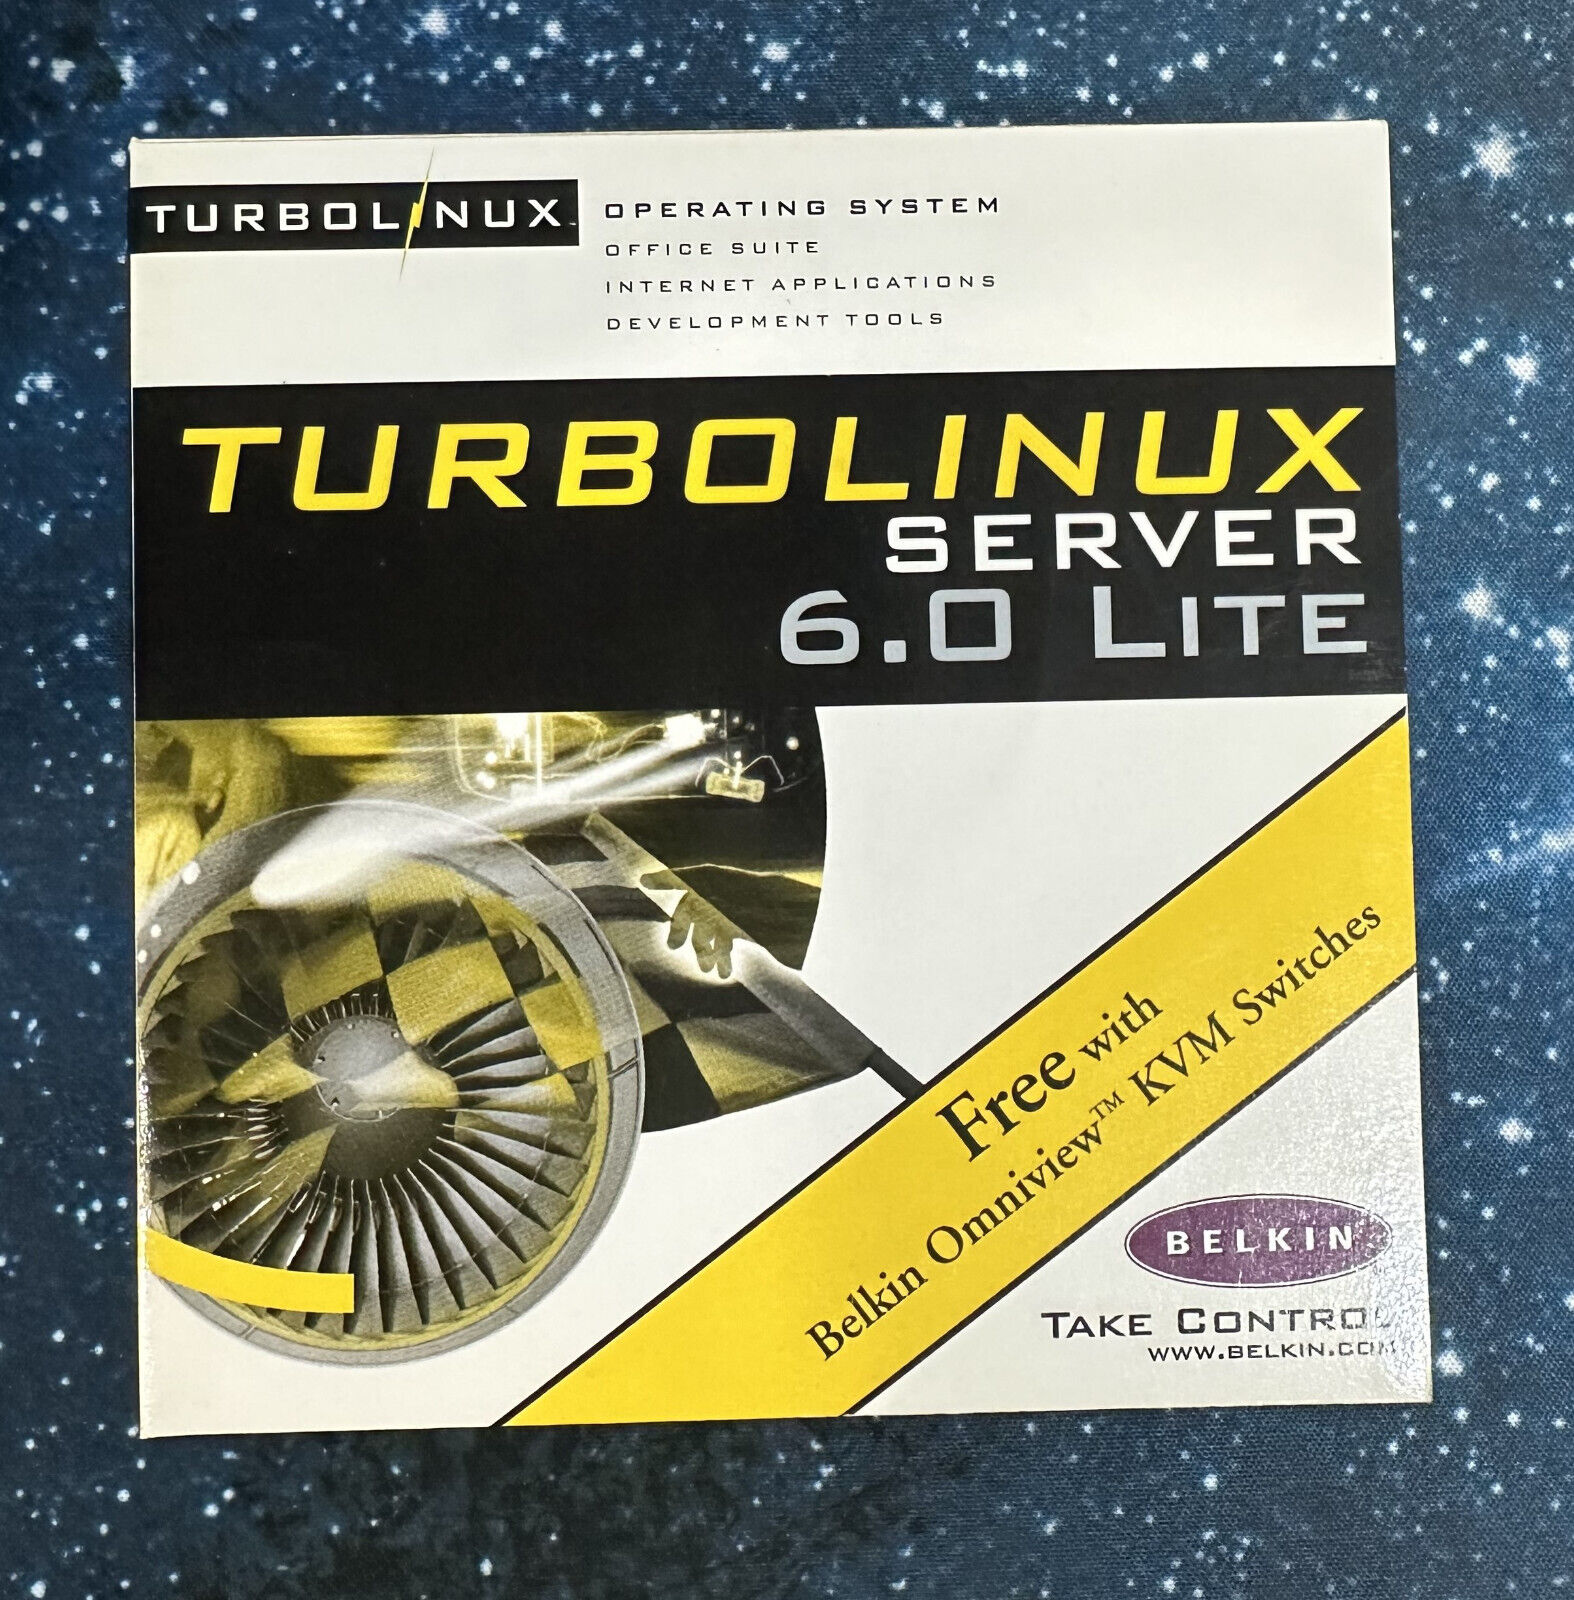 Turbolinux Operating System Server 6.0 Lite CD Belkin